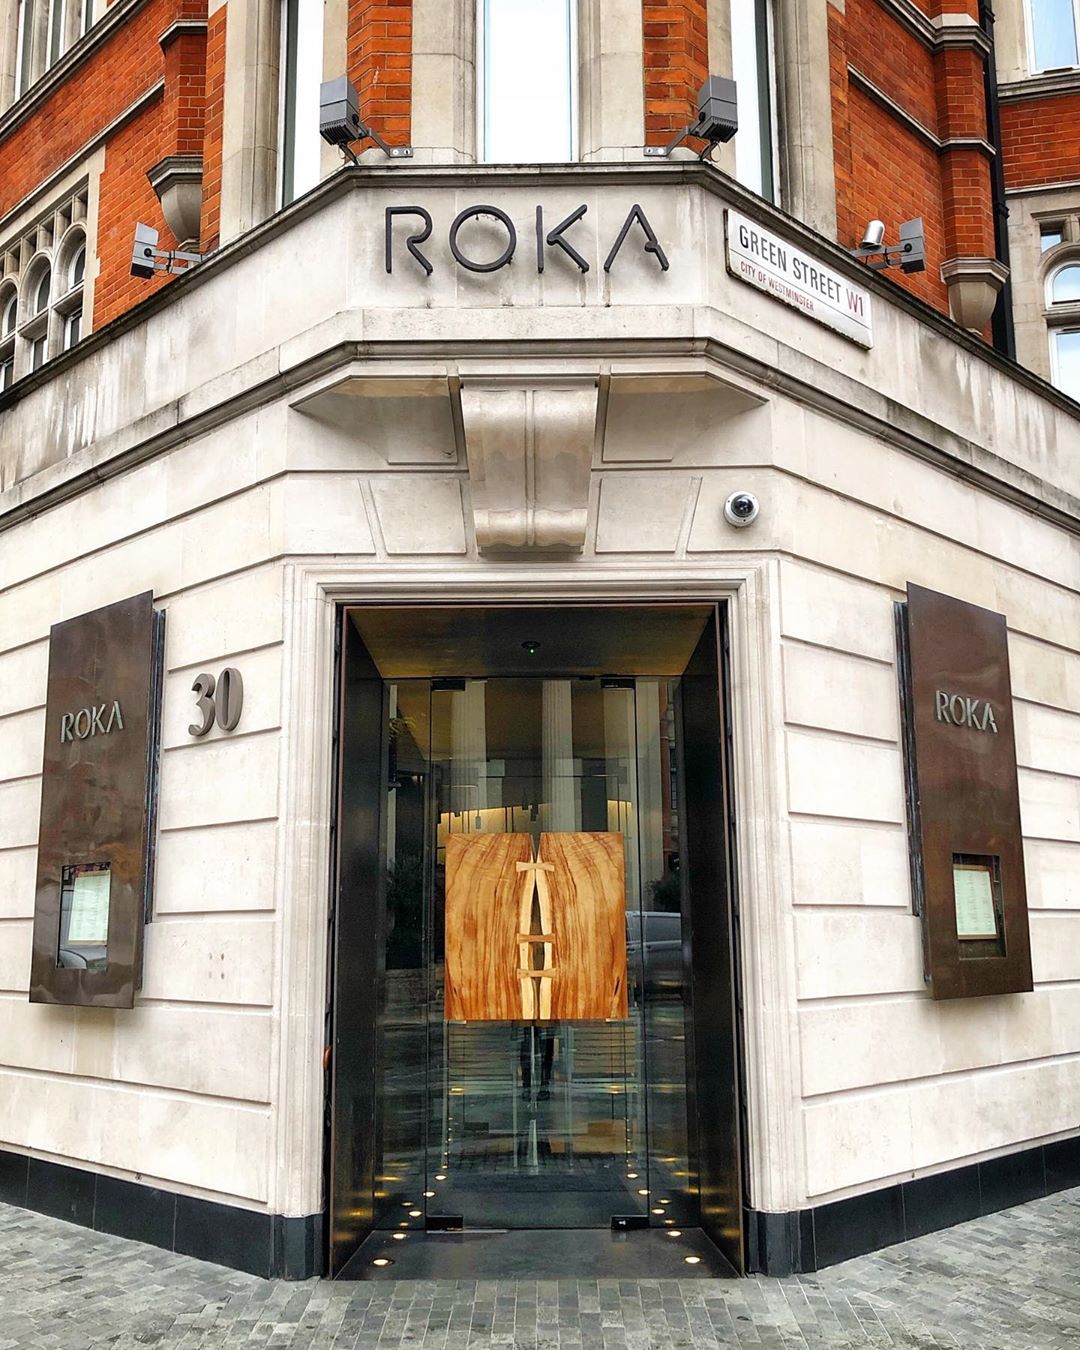 Roka 10 Great Japanese Restaurants in London